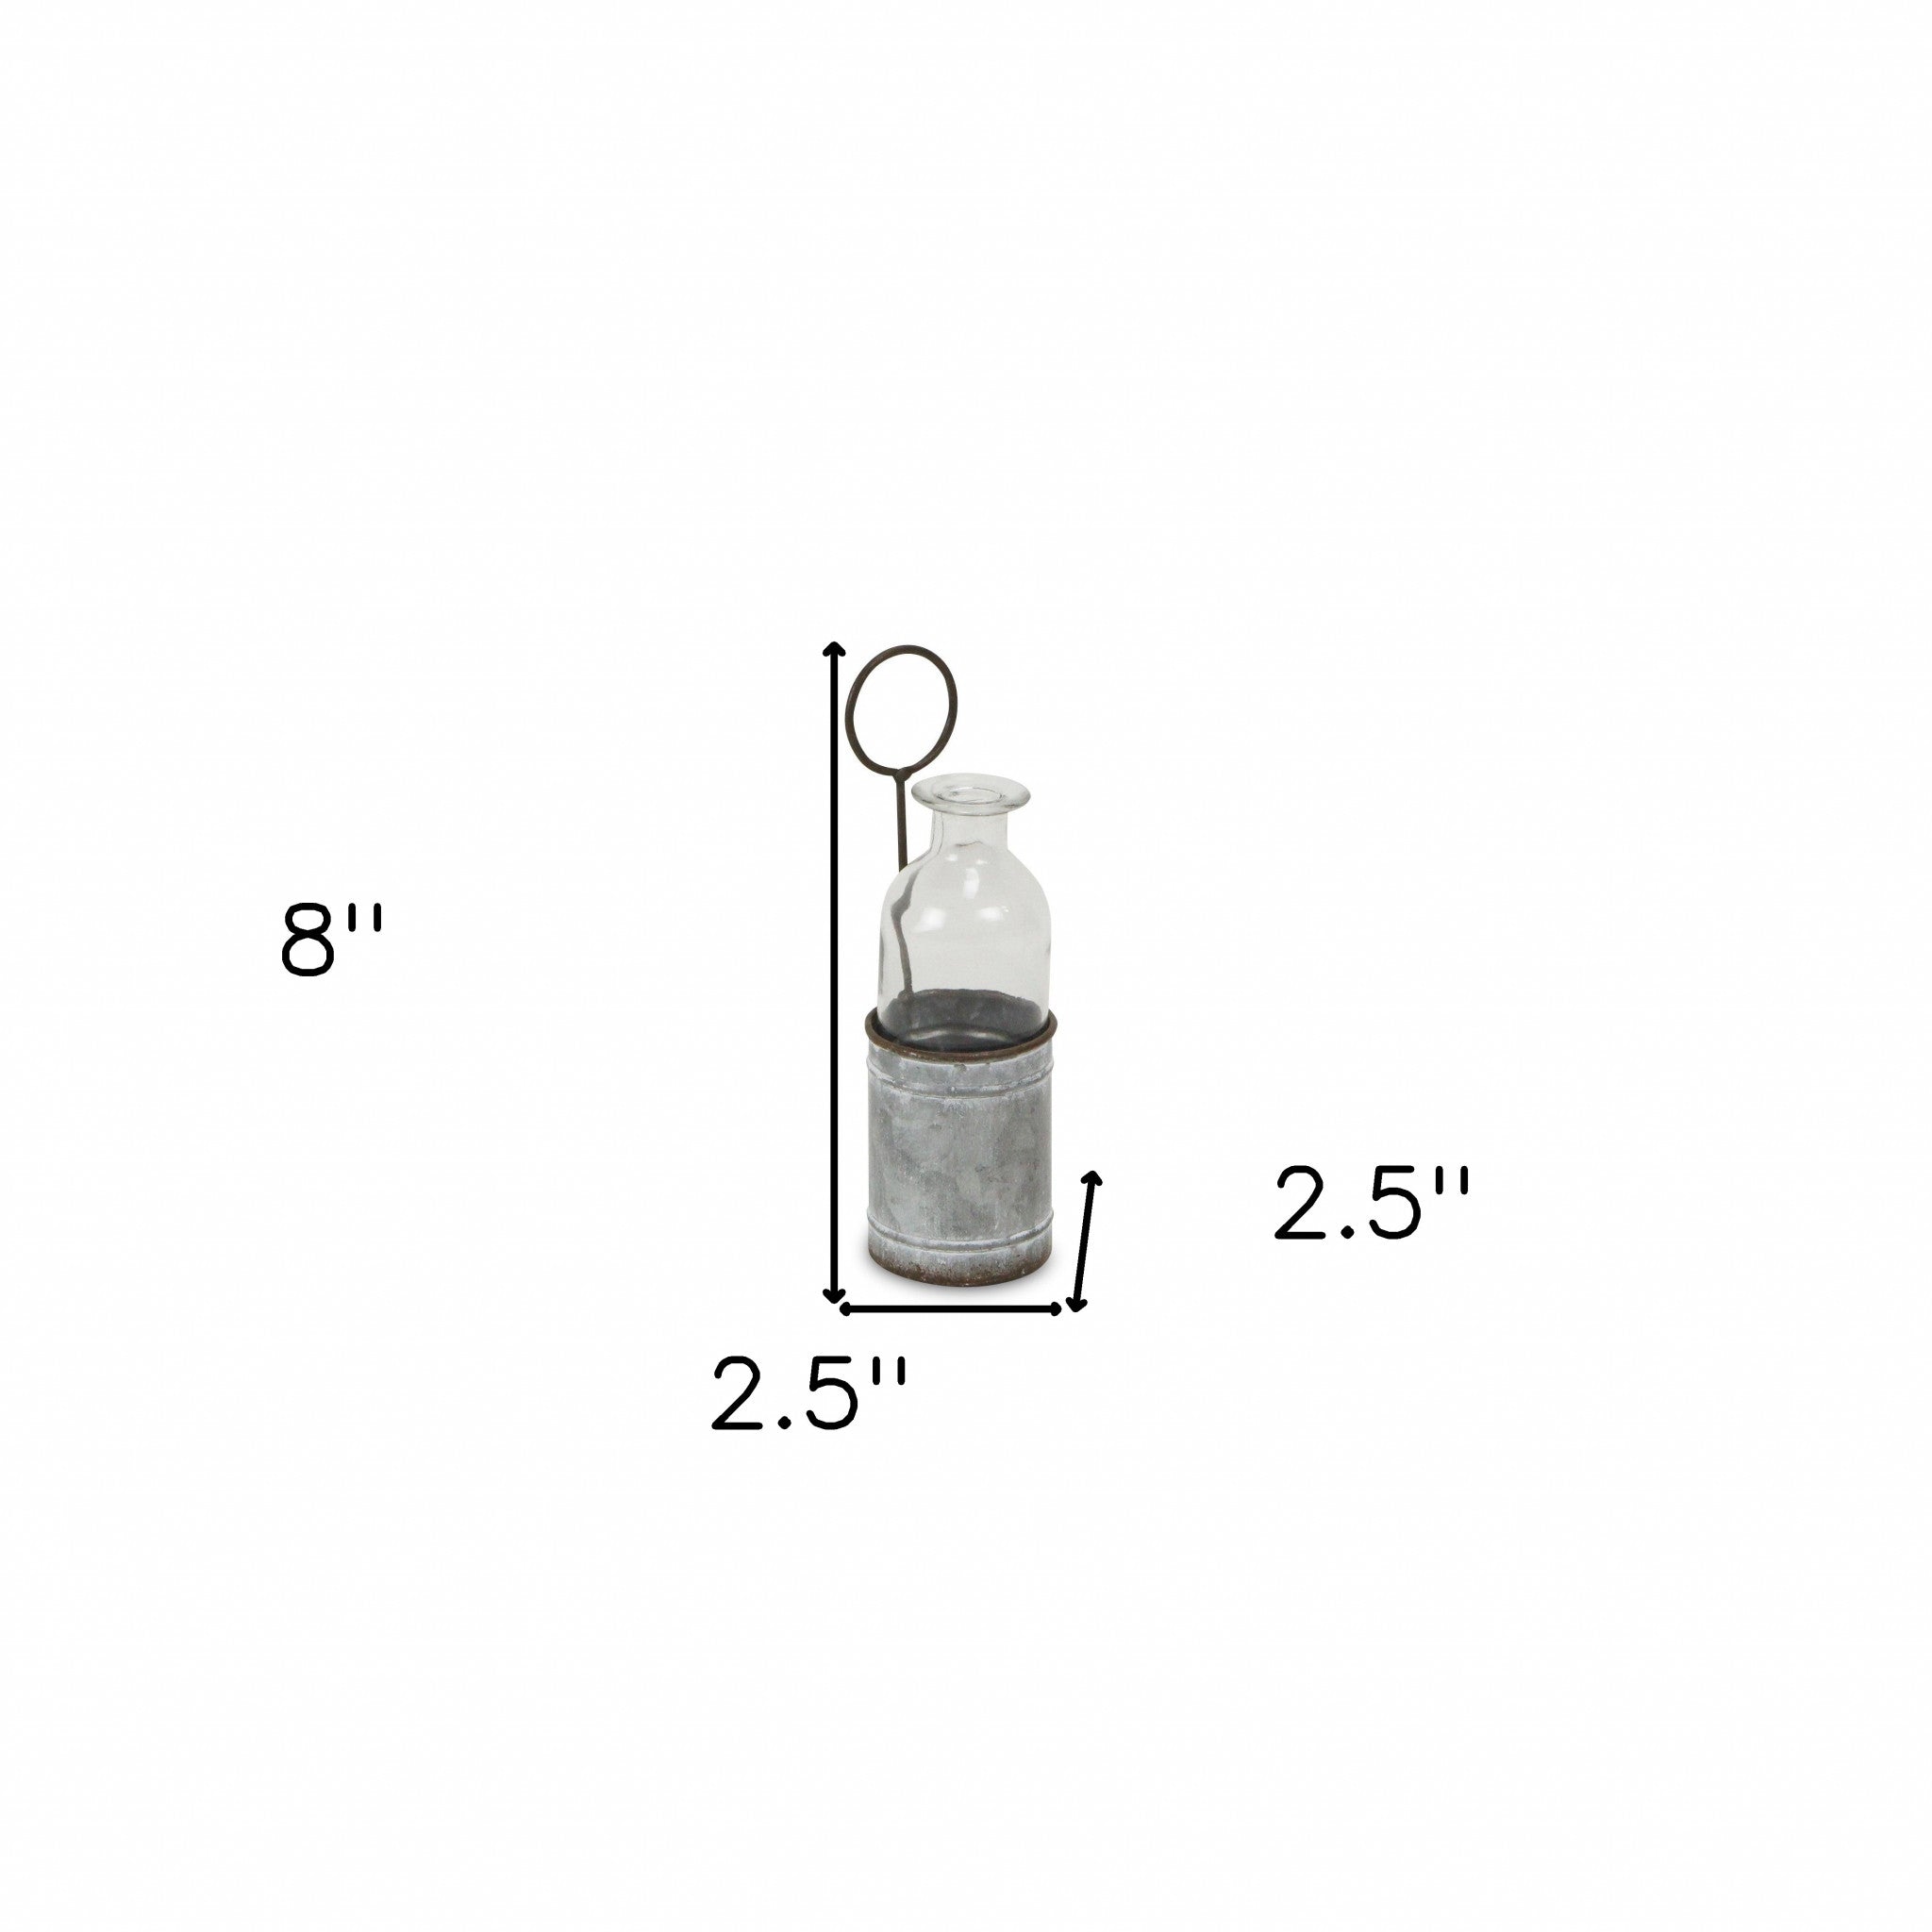 8" Gray Galvanized Metal and Glass Jar Holder